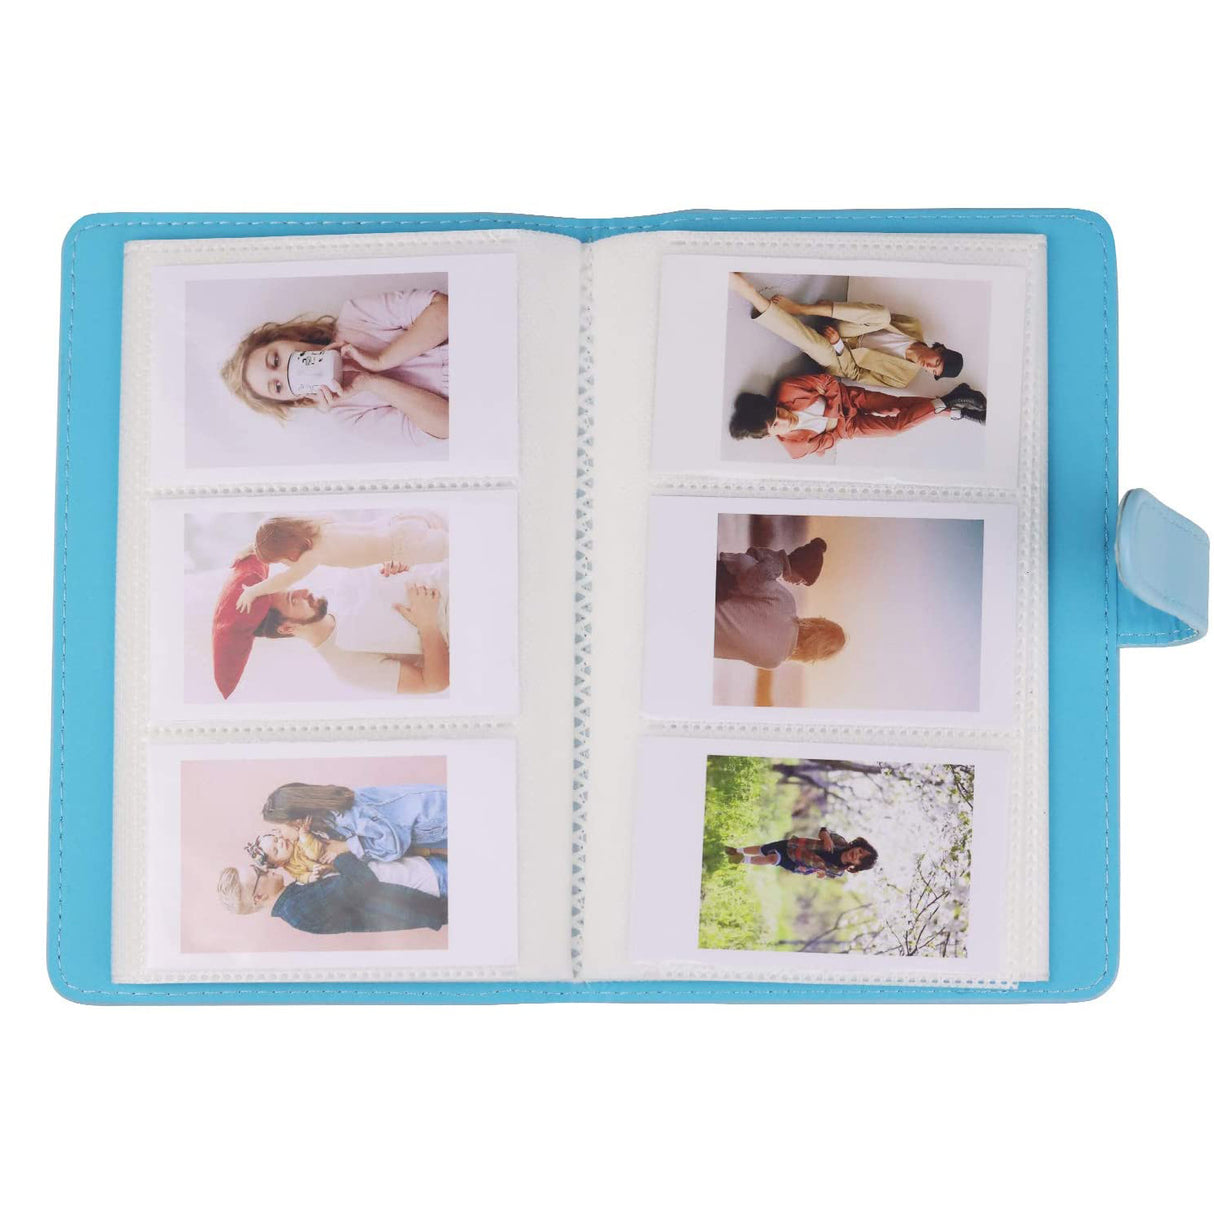 Fujifilm Instax Mini 5 Pack 10 Sheets Instant Film with 96-sheet Album for mini film